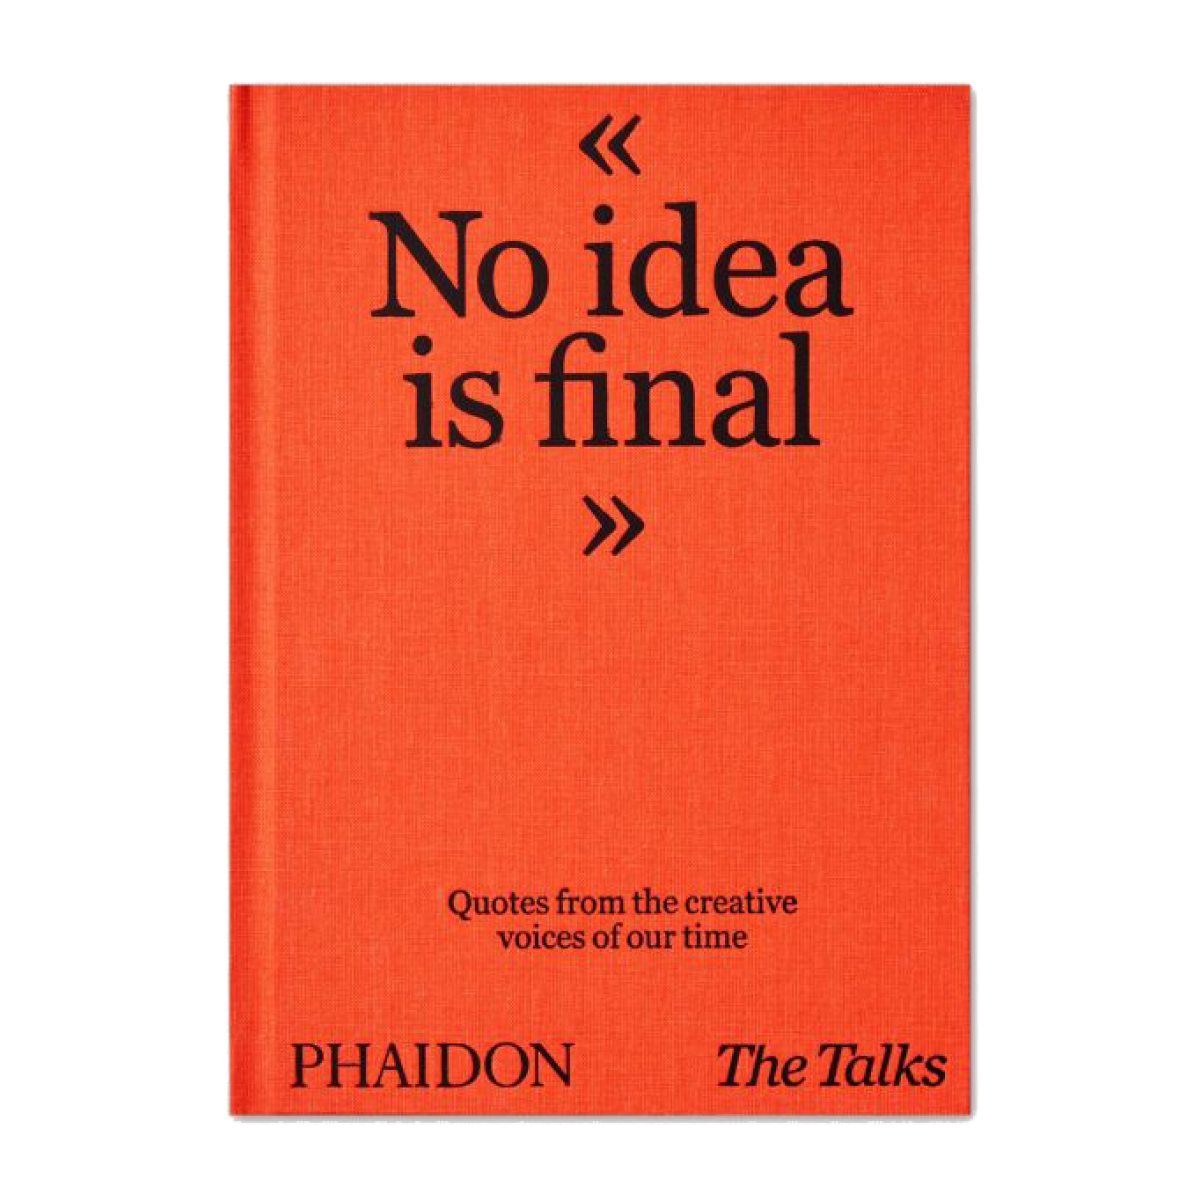 An orange book from Phaidon publishing